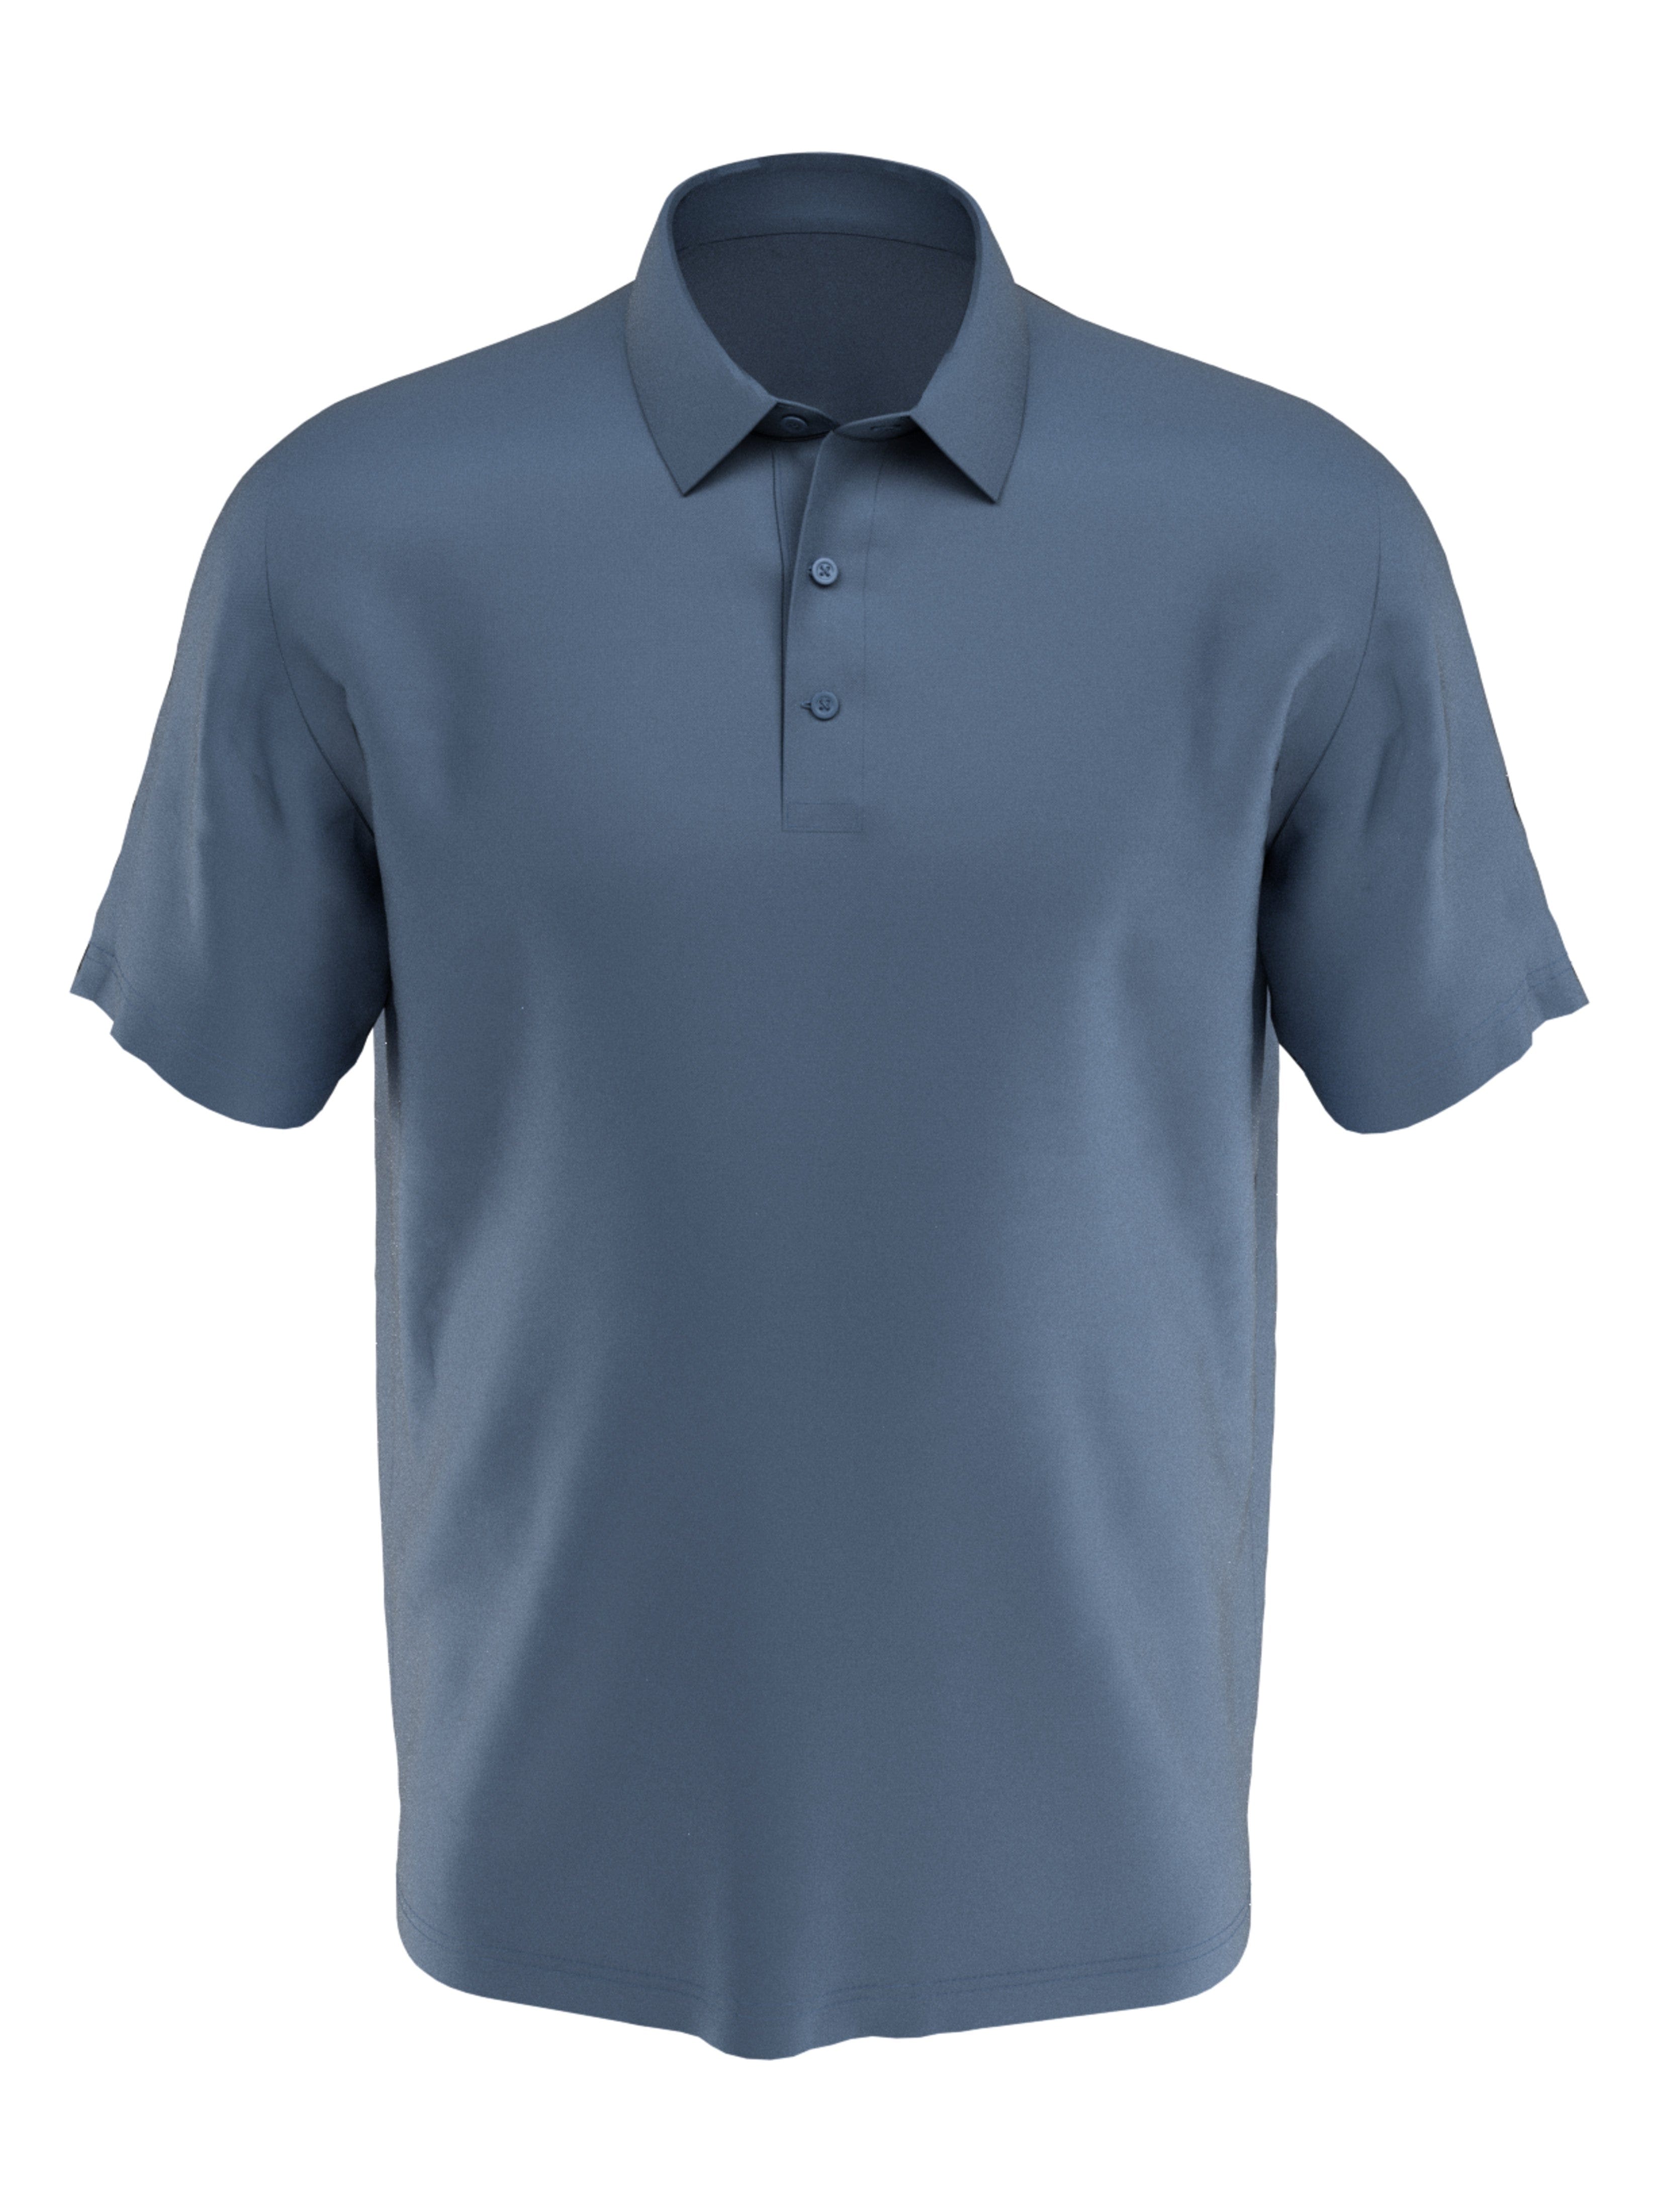 Callaway Apparel Mens Big & Tall Solid Swing Tech Golf Polo Shirt, Size 1X, Blue Horizon, Polyester/Elastane | Golf Apparel Shop